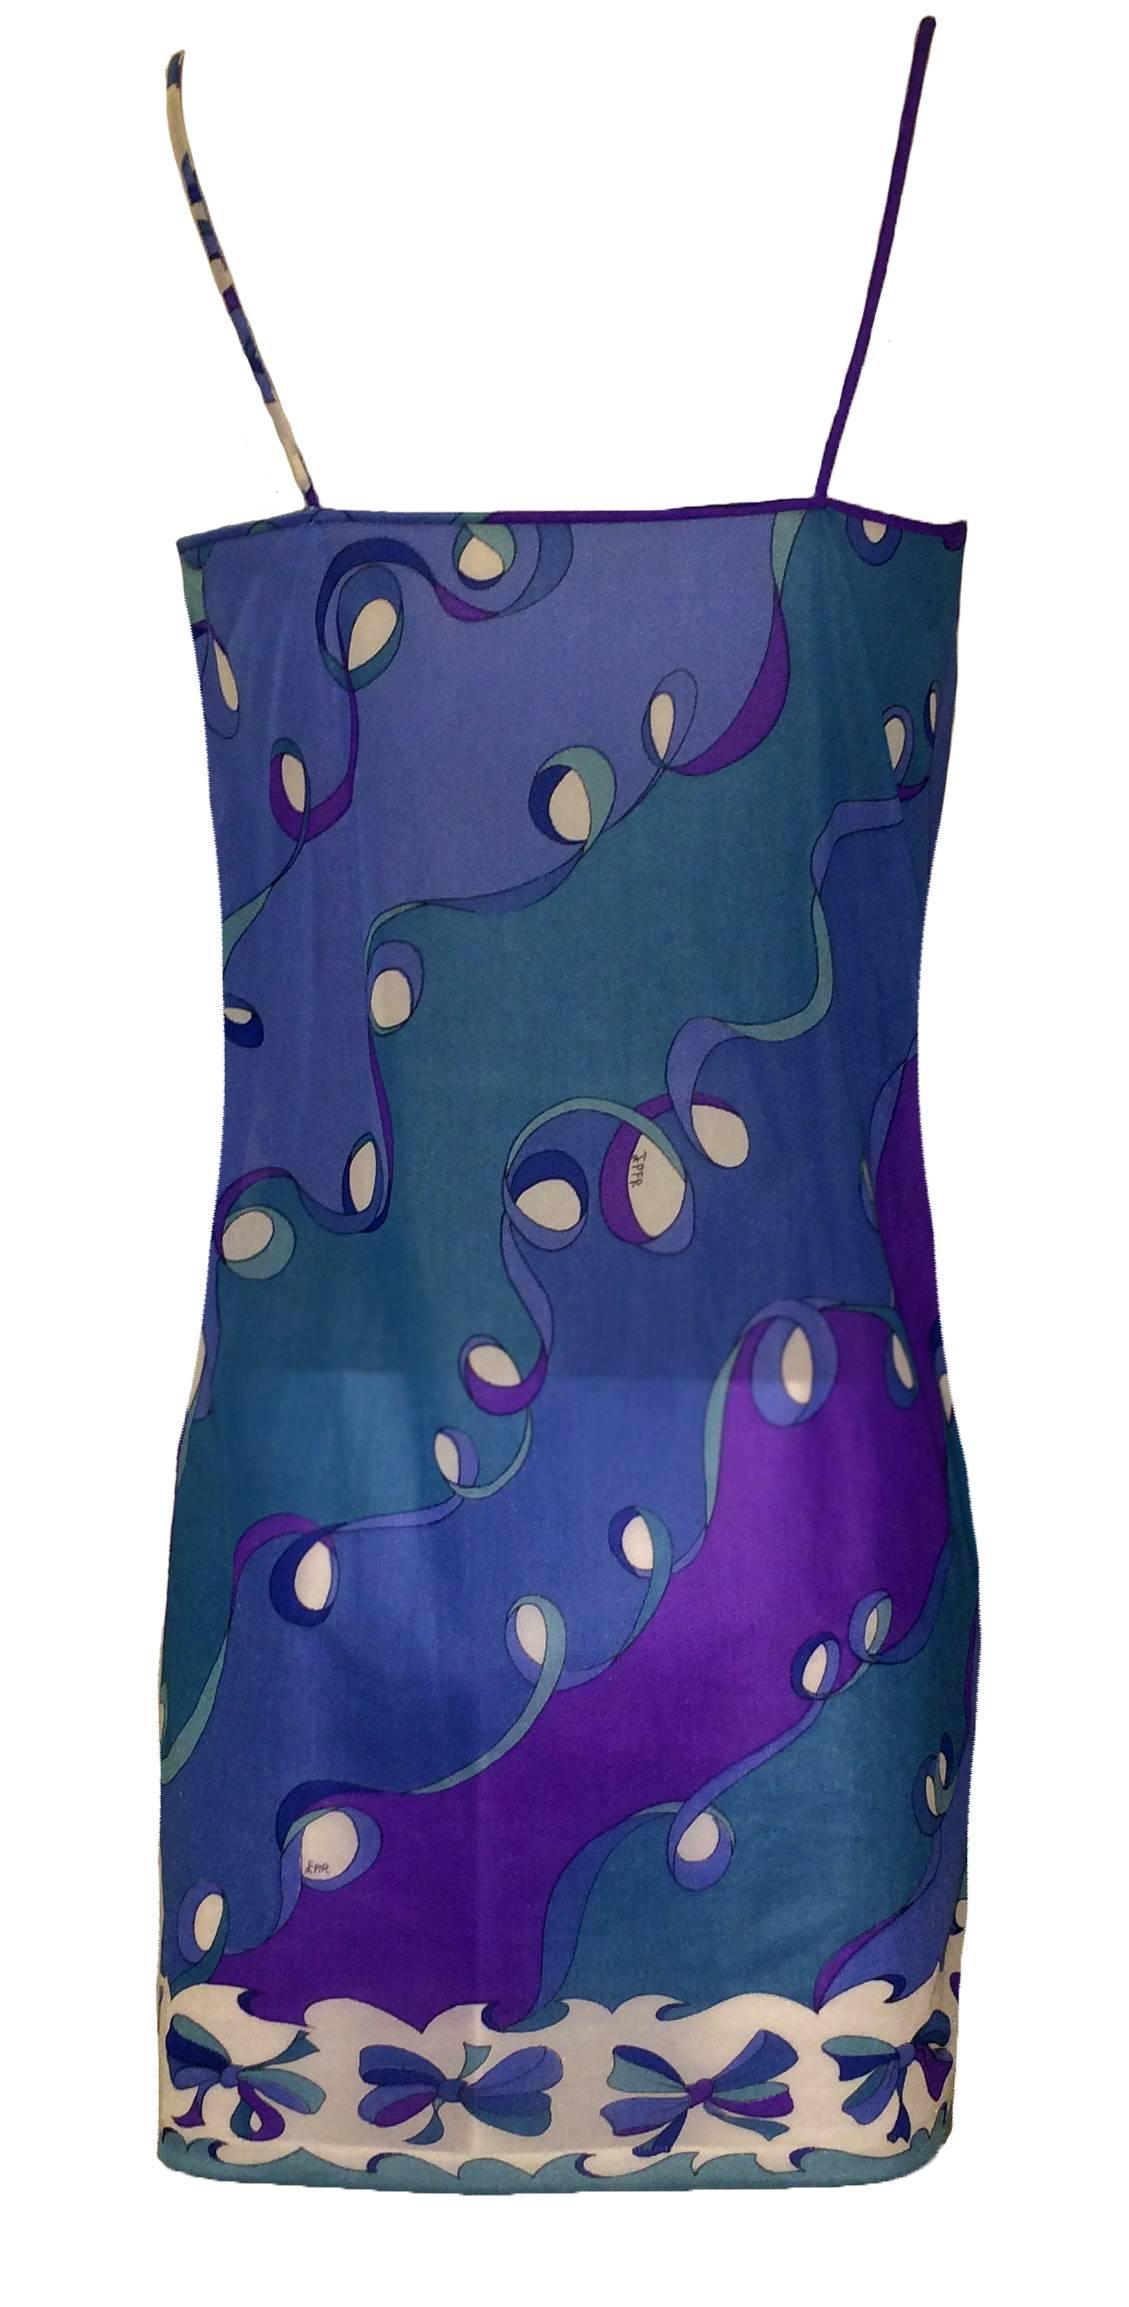 Emilio Pucci for Formfit Rogers semi-sheer bow print nylon slip dress.

No labels, signed 'EPFR